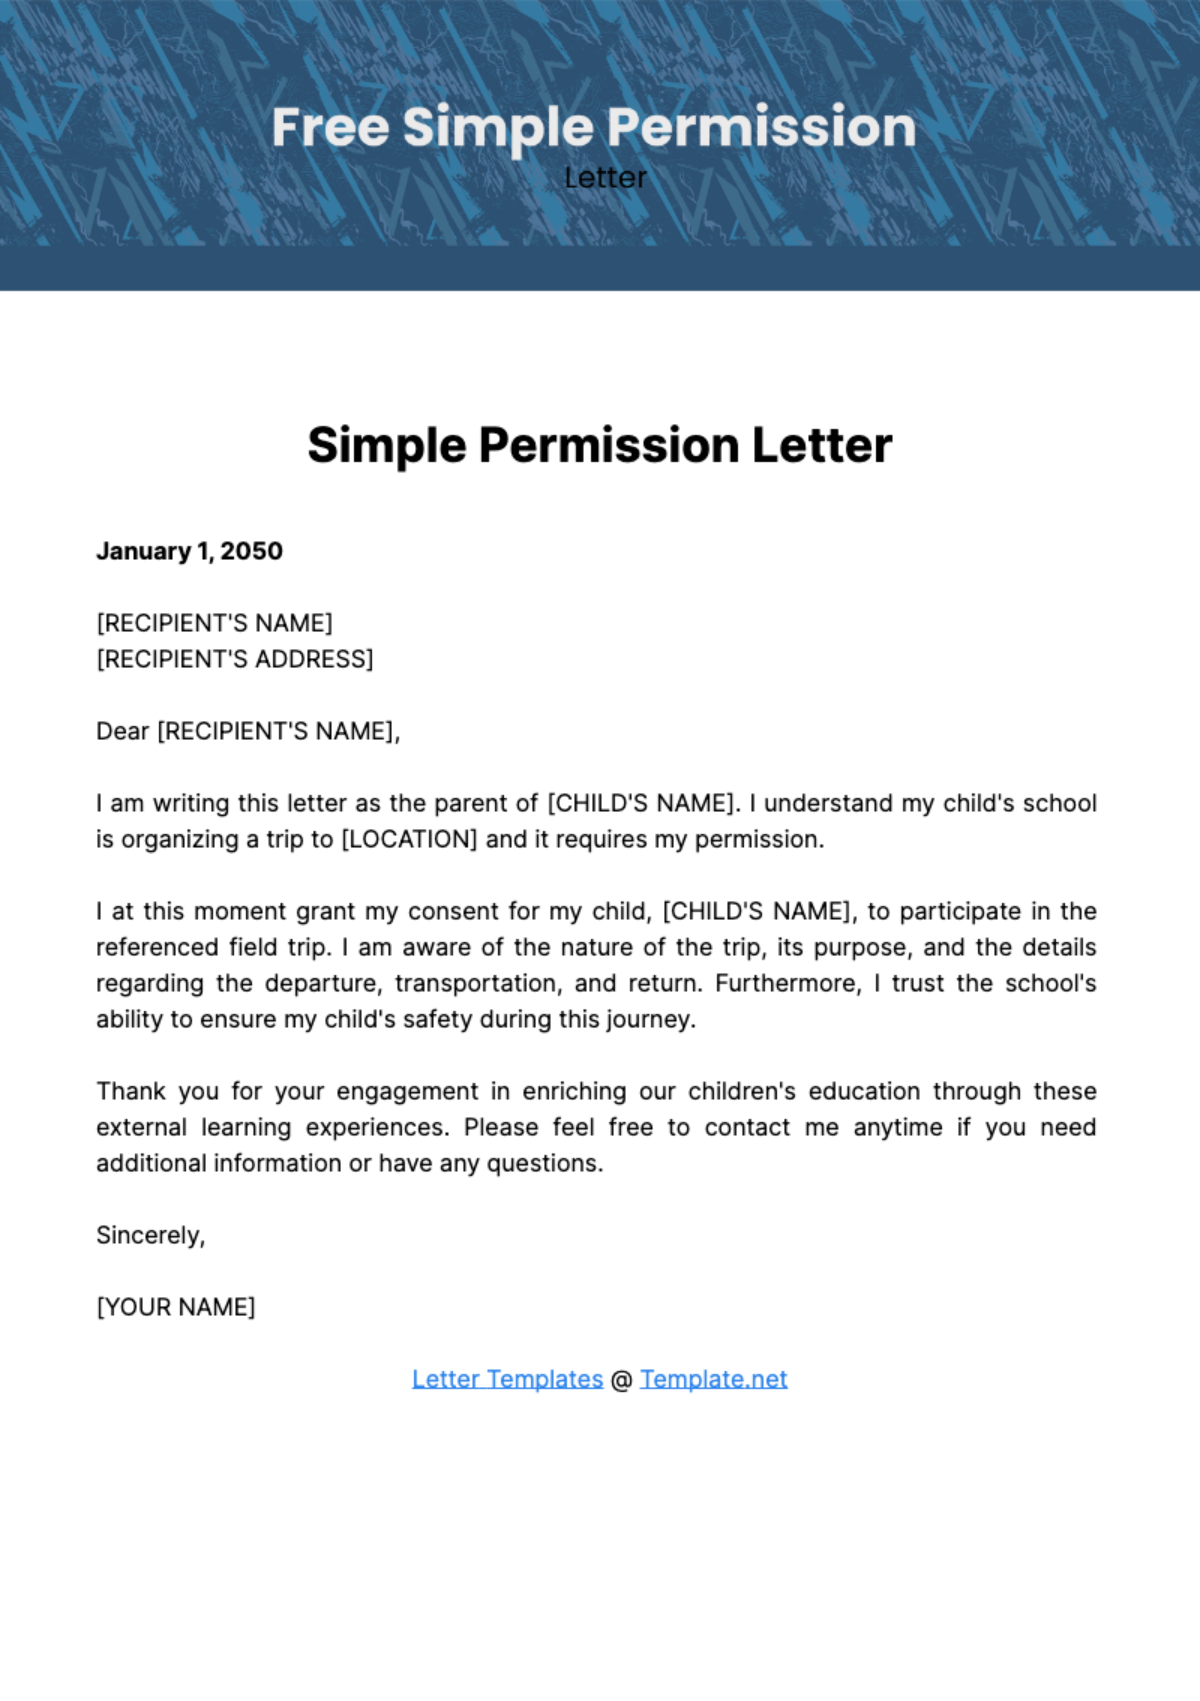 Simple Permission Letter Template